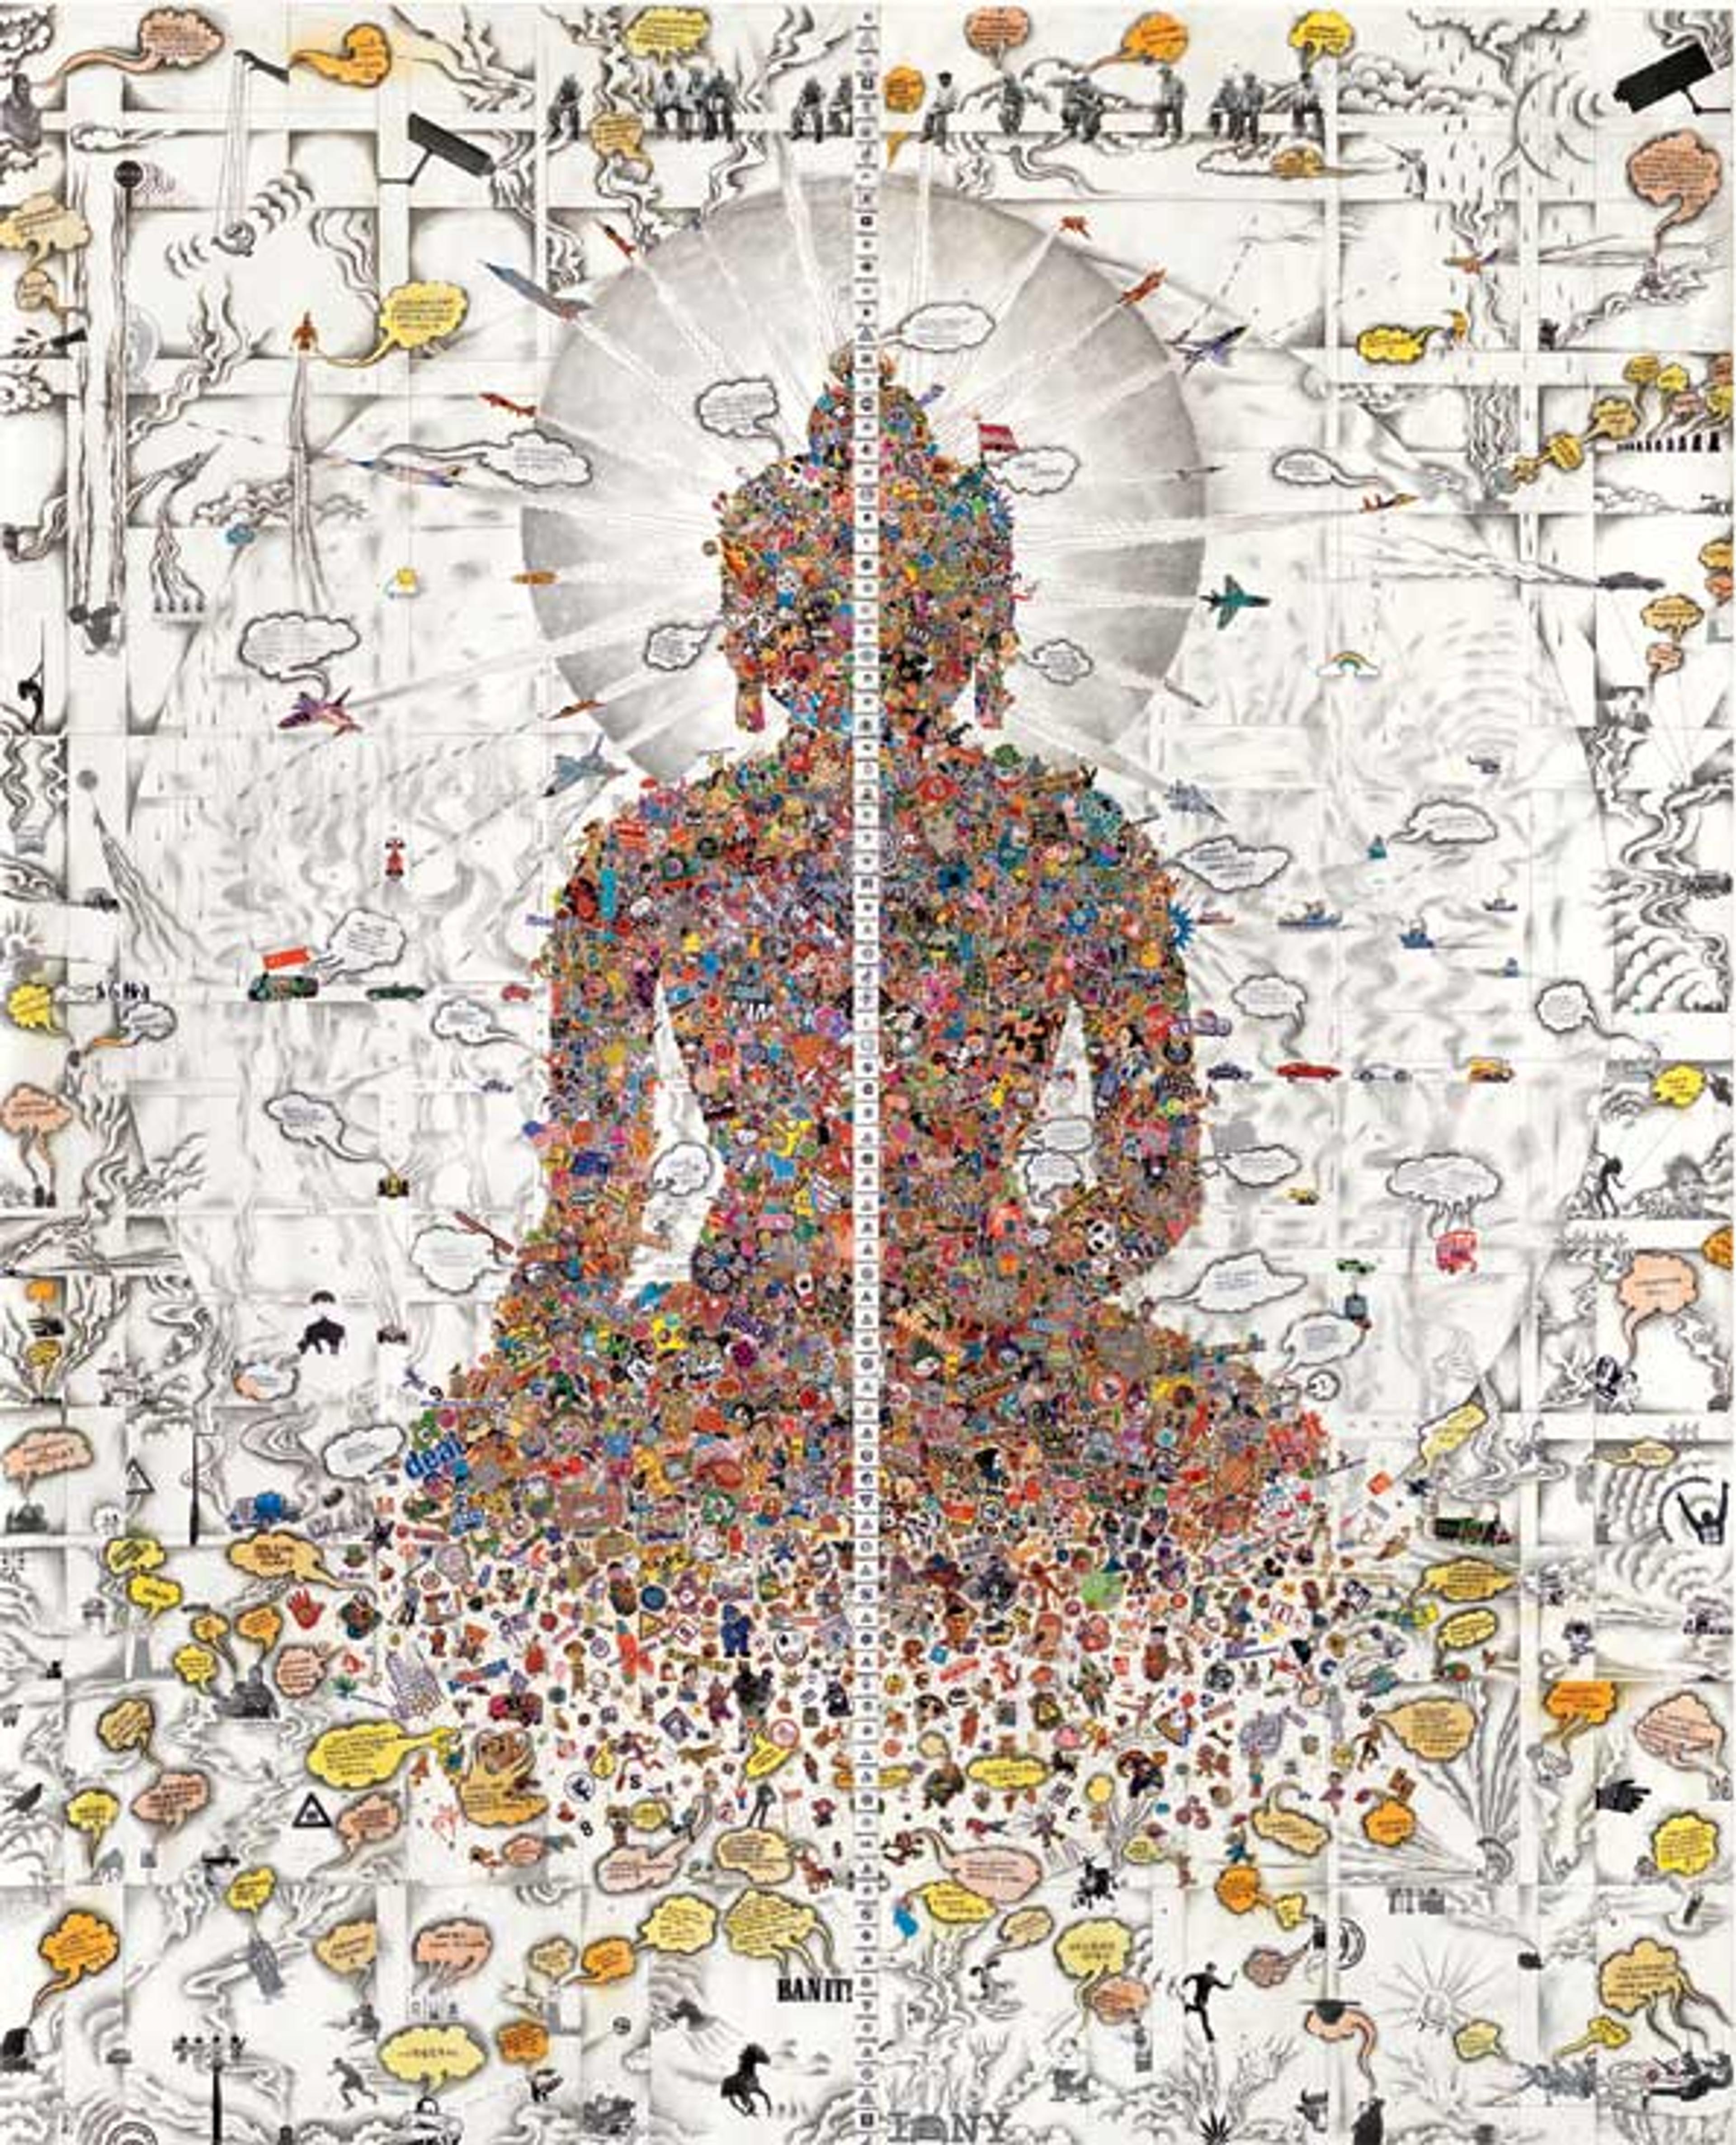 Gonkar Gyatso (born Lhasa, 1961). Dissected Buddha, 2011. 